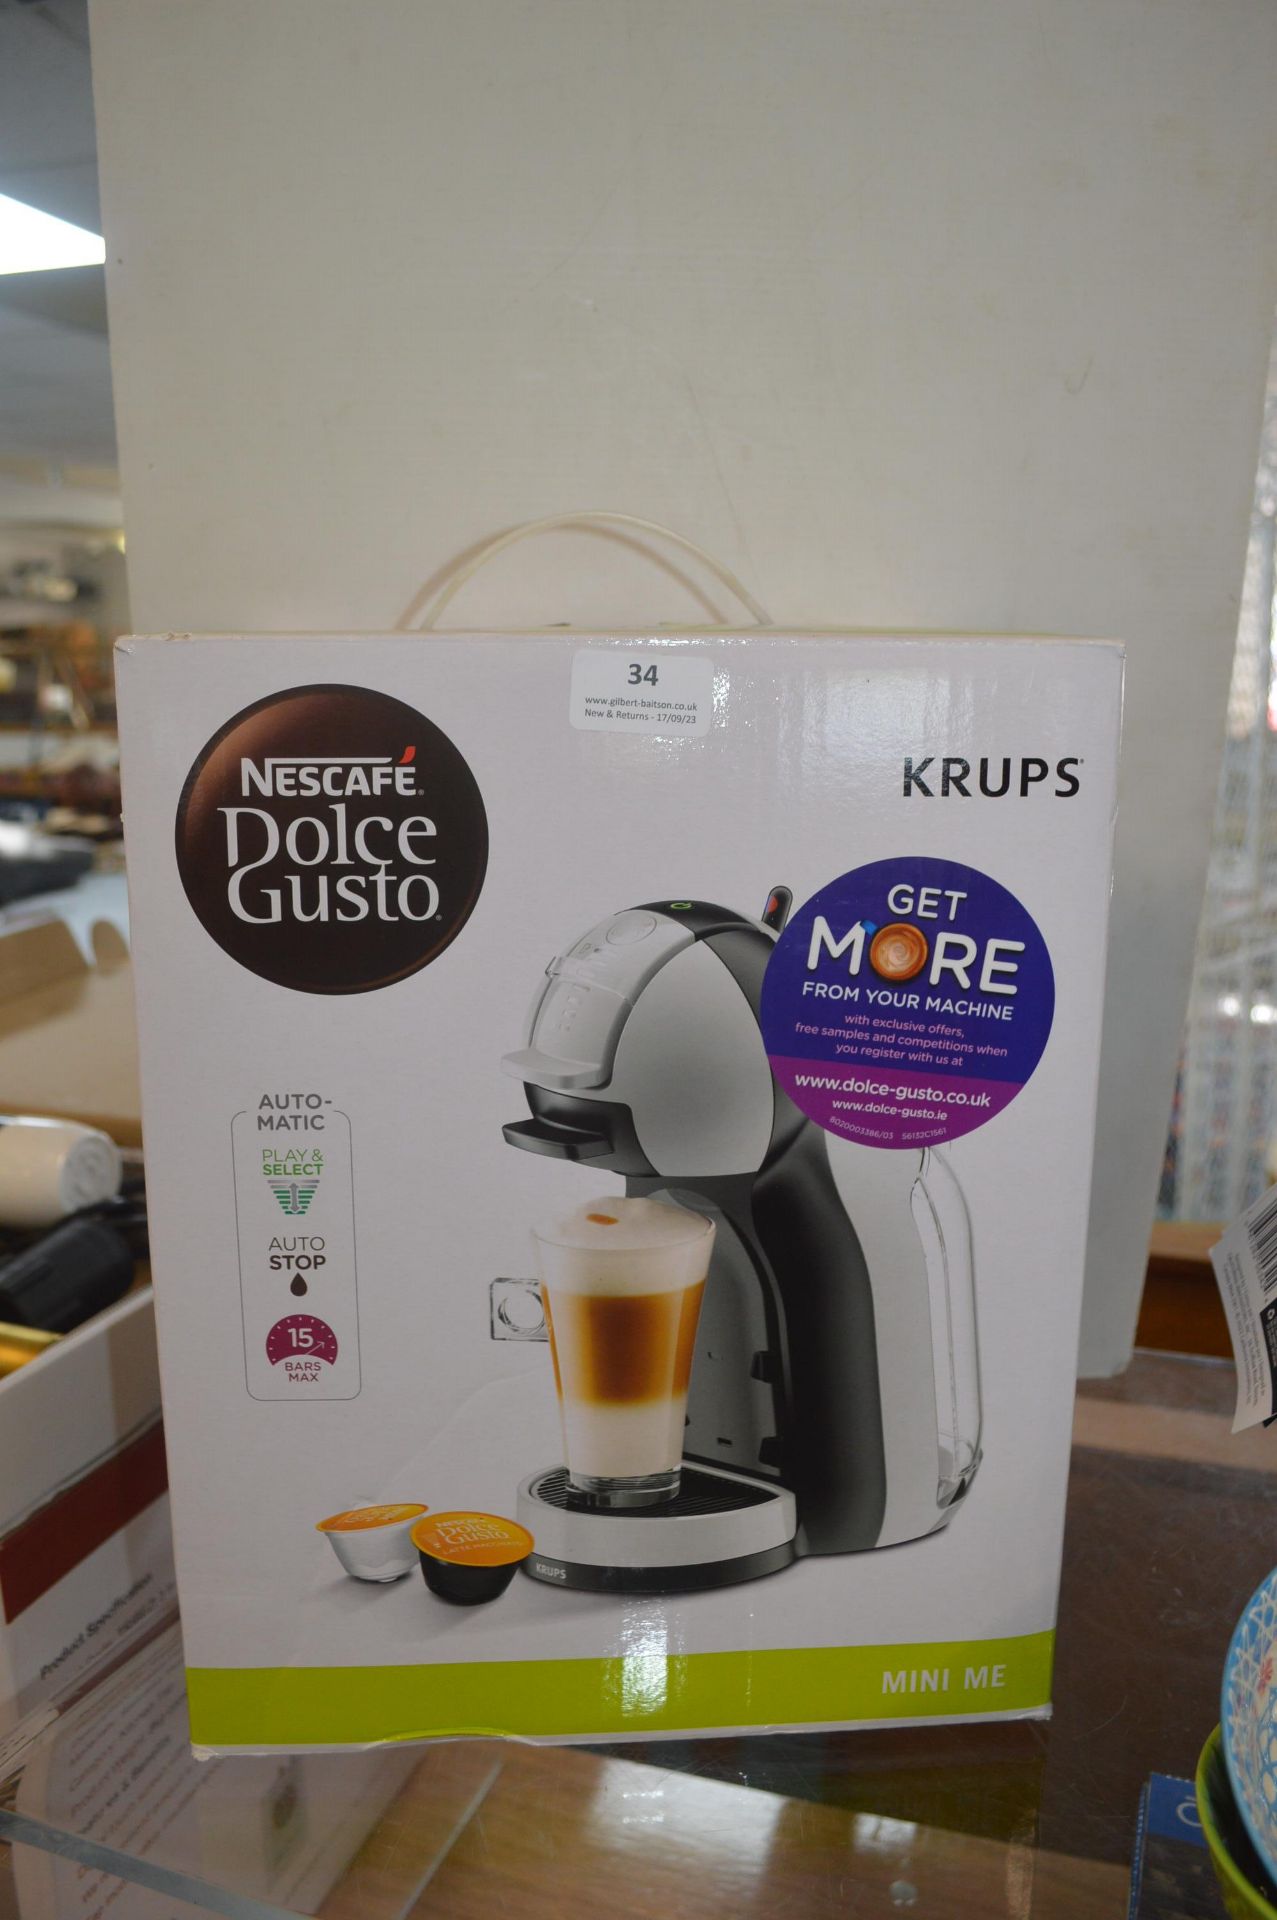 *Nescafe Krups Dolce Gusto Mini Me Coffee Machine